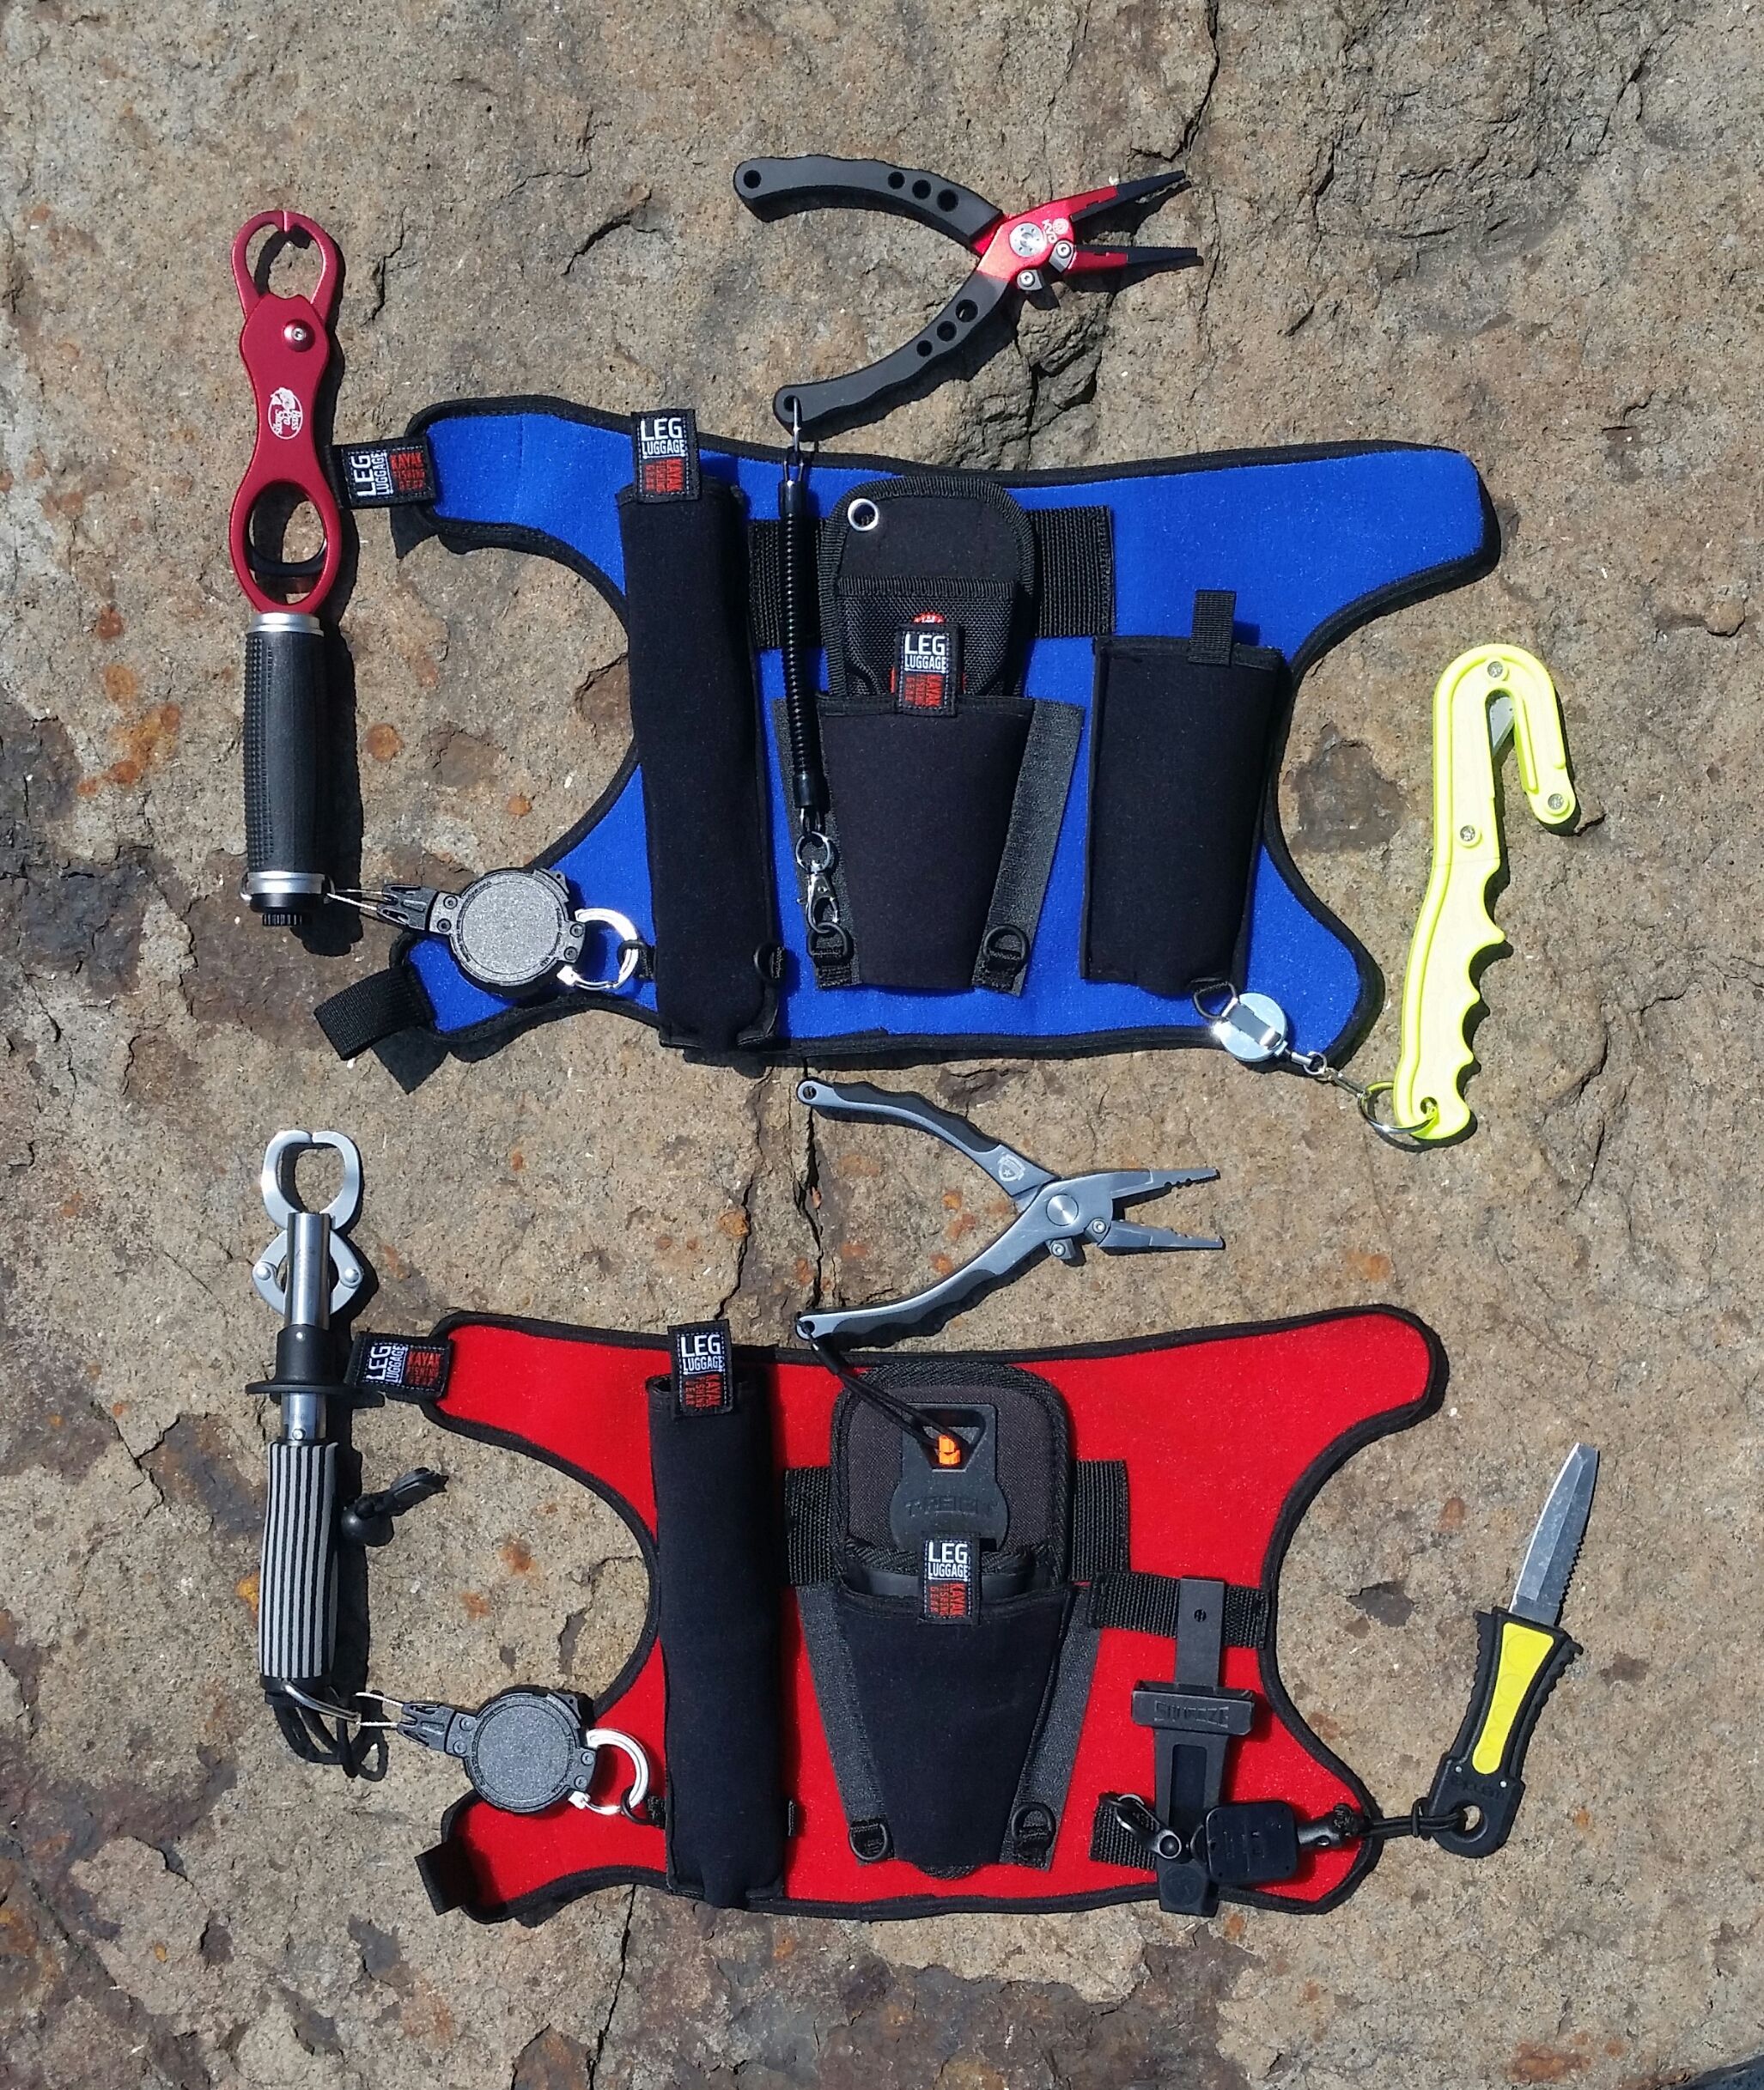 Leg Luggage Kayak Fishing Gear: Keep your tools organized while on ...